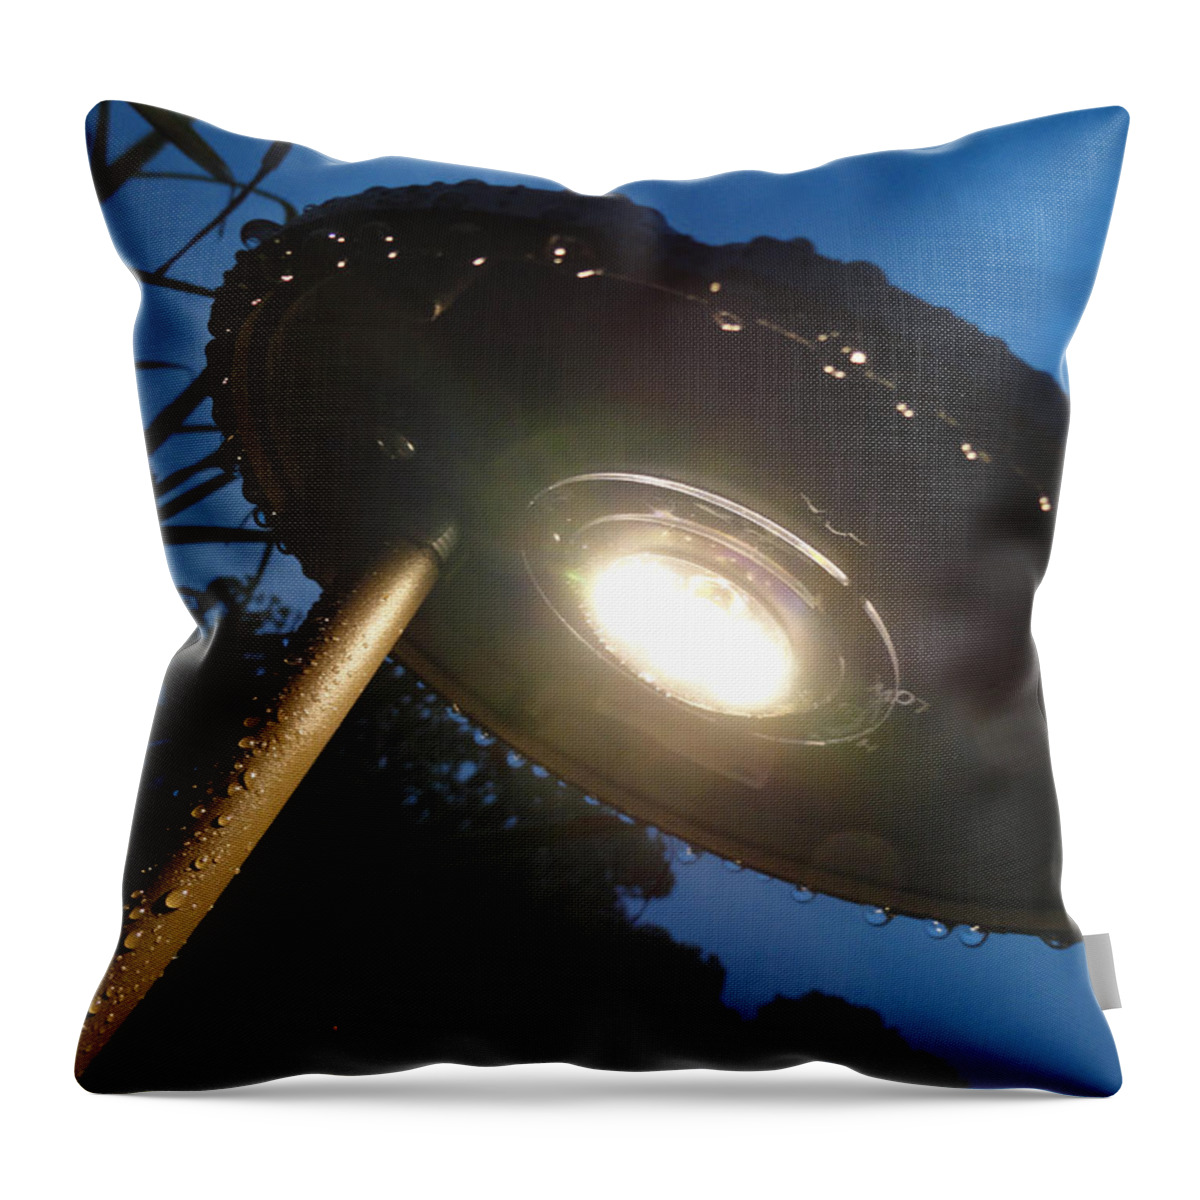 Landscape Light Throw Pillow featuring the photograph Spaceship Landscape Light by Trish Hale